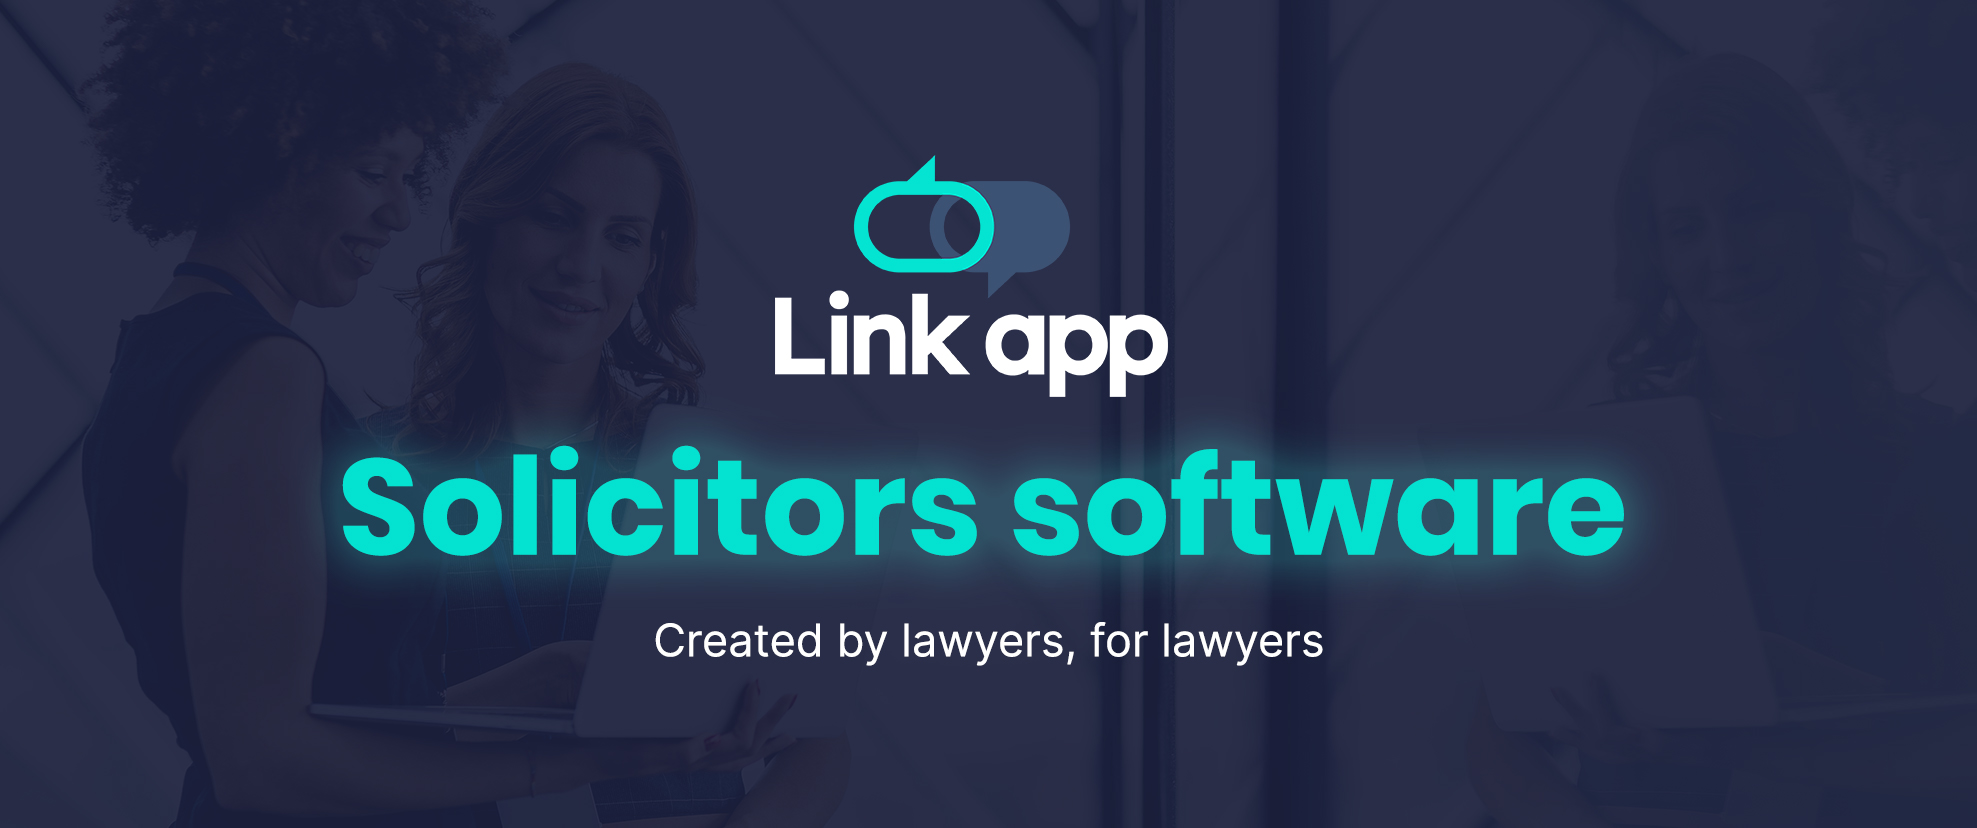 solicitors-software